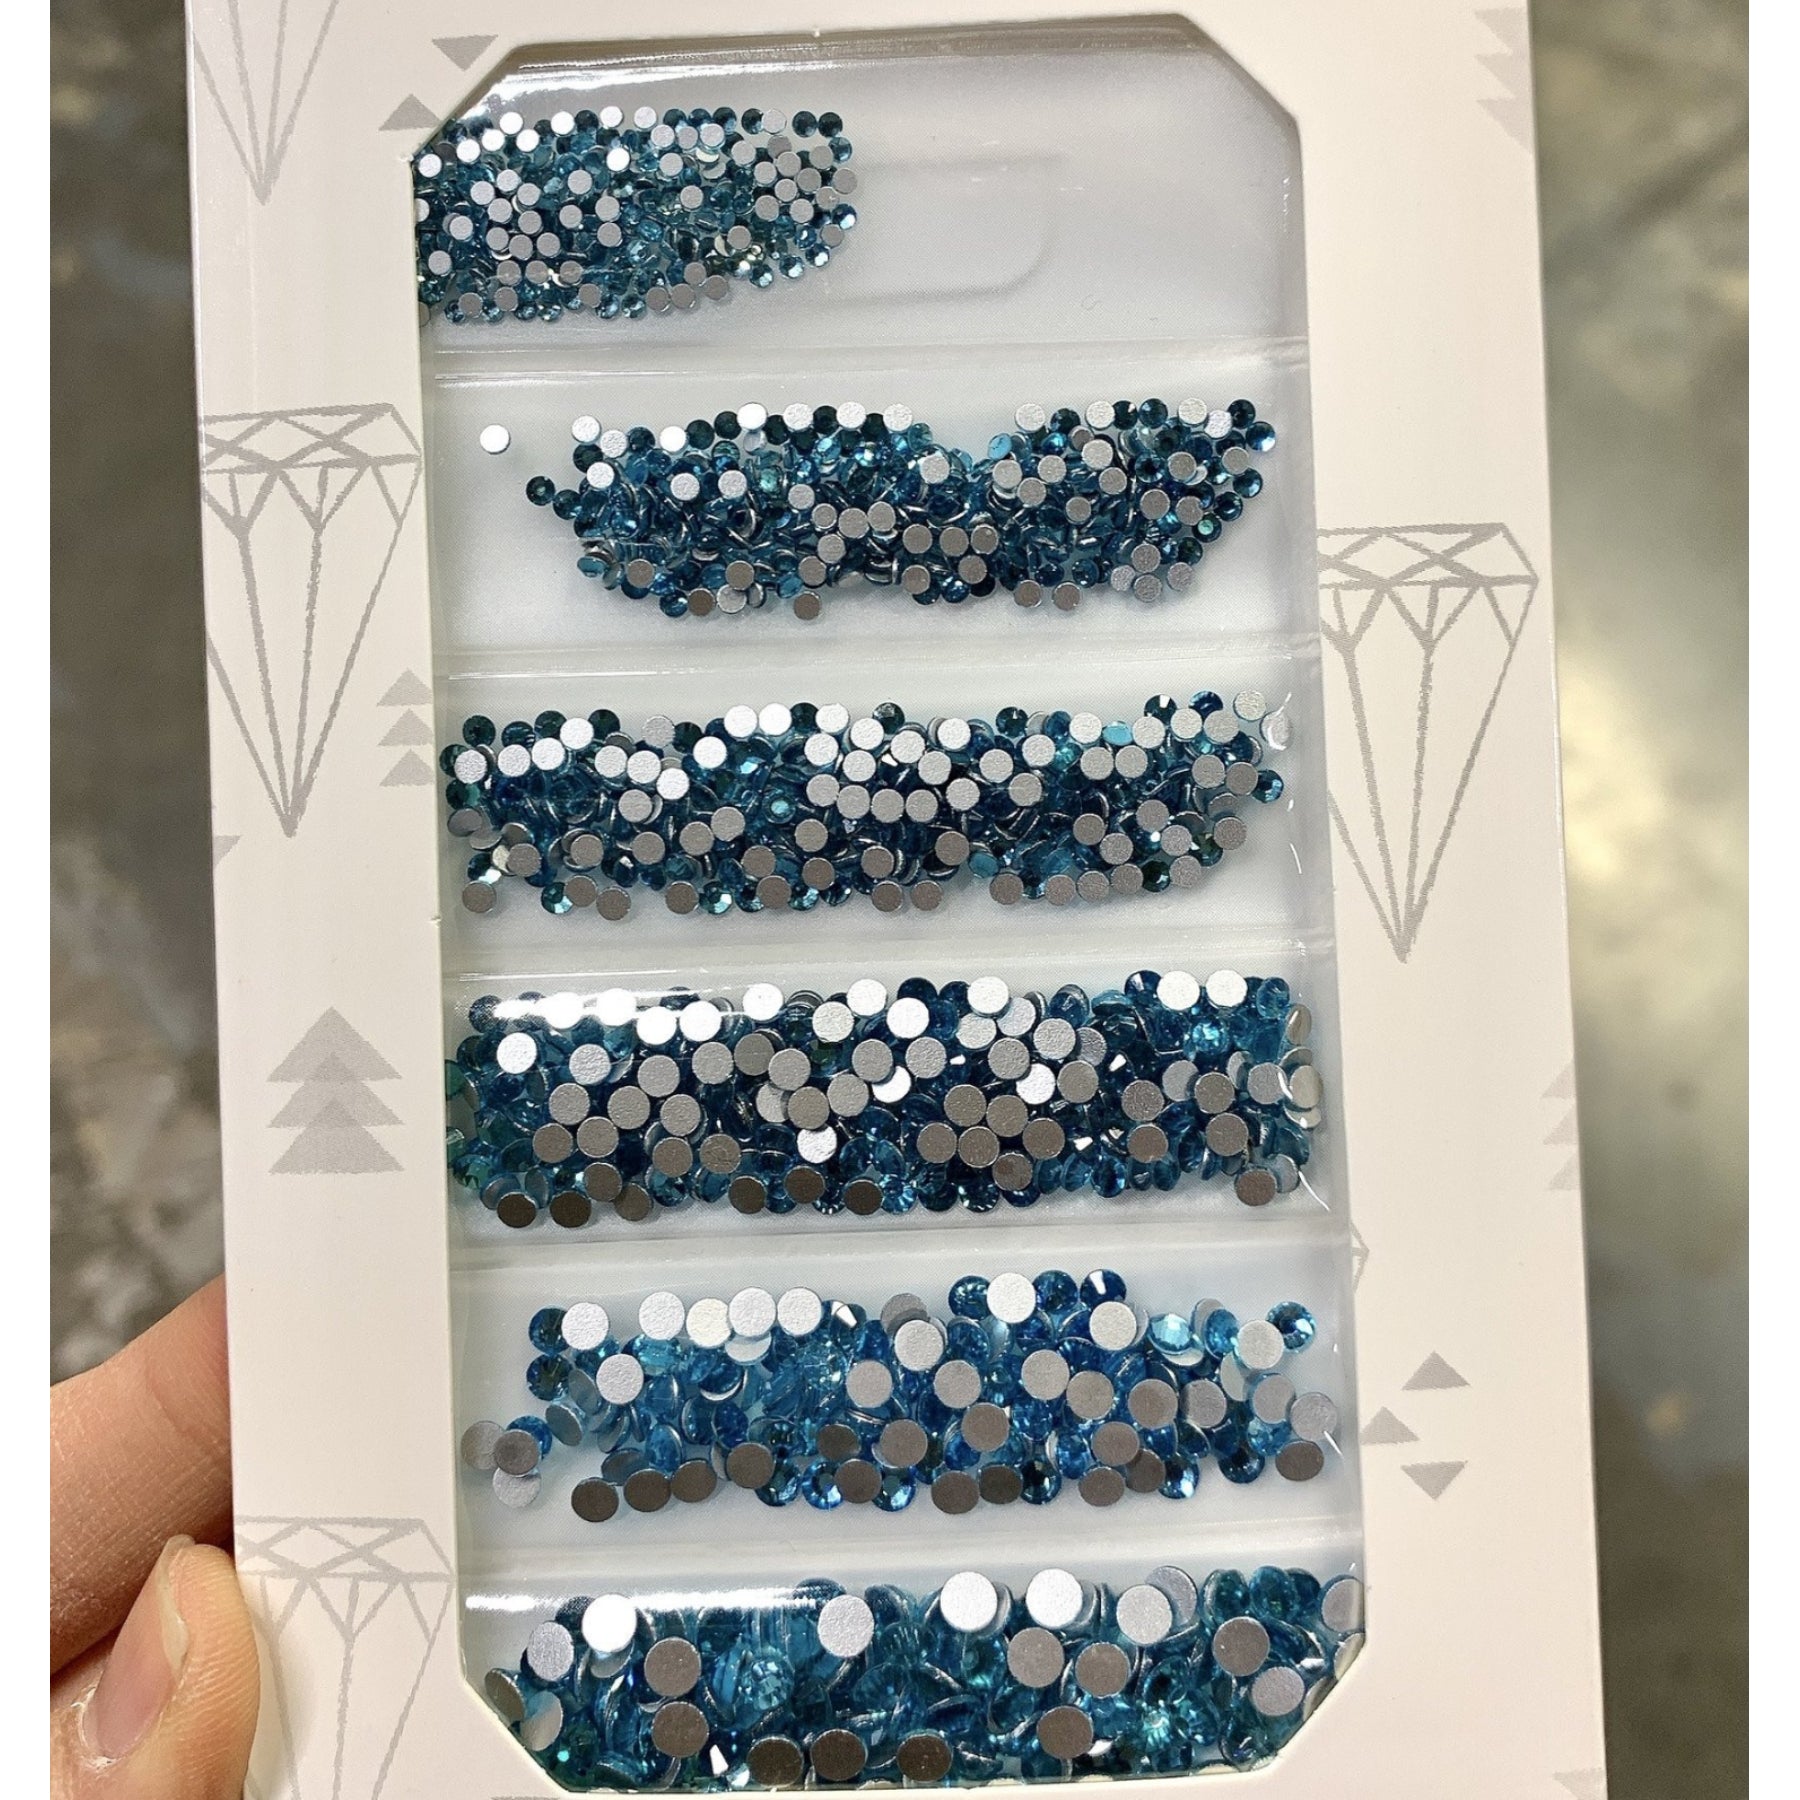 Mixed Crystal Flatback Assorted Pack Nail Art - Blue Zircon, Blue Crystal Rhinestone Nail Design, Nail Art with Blue Gems